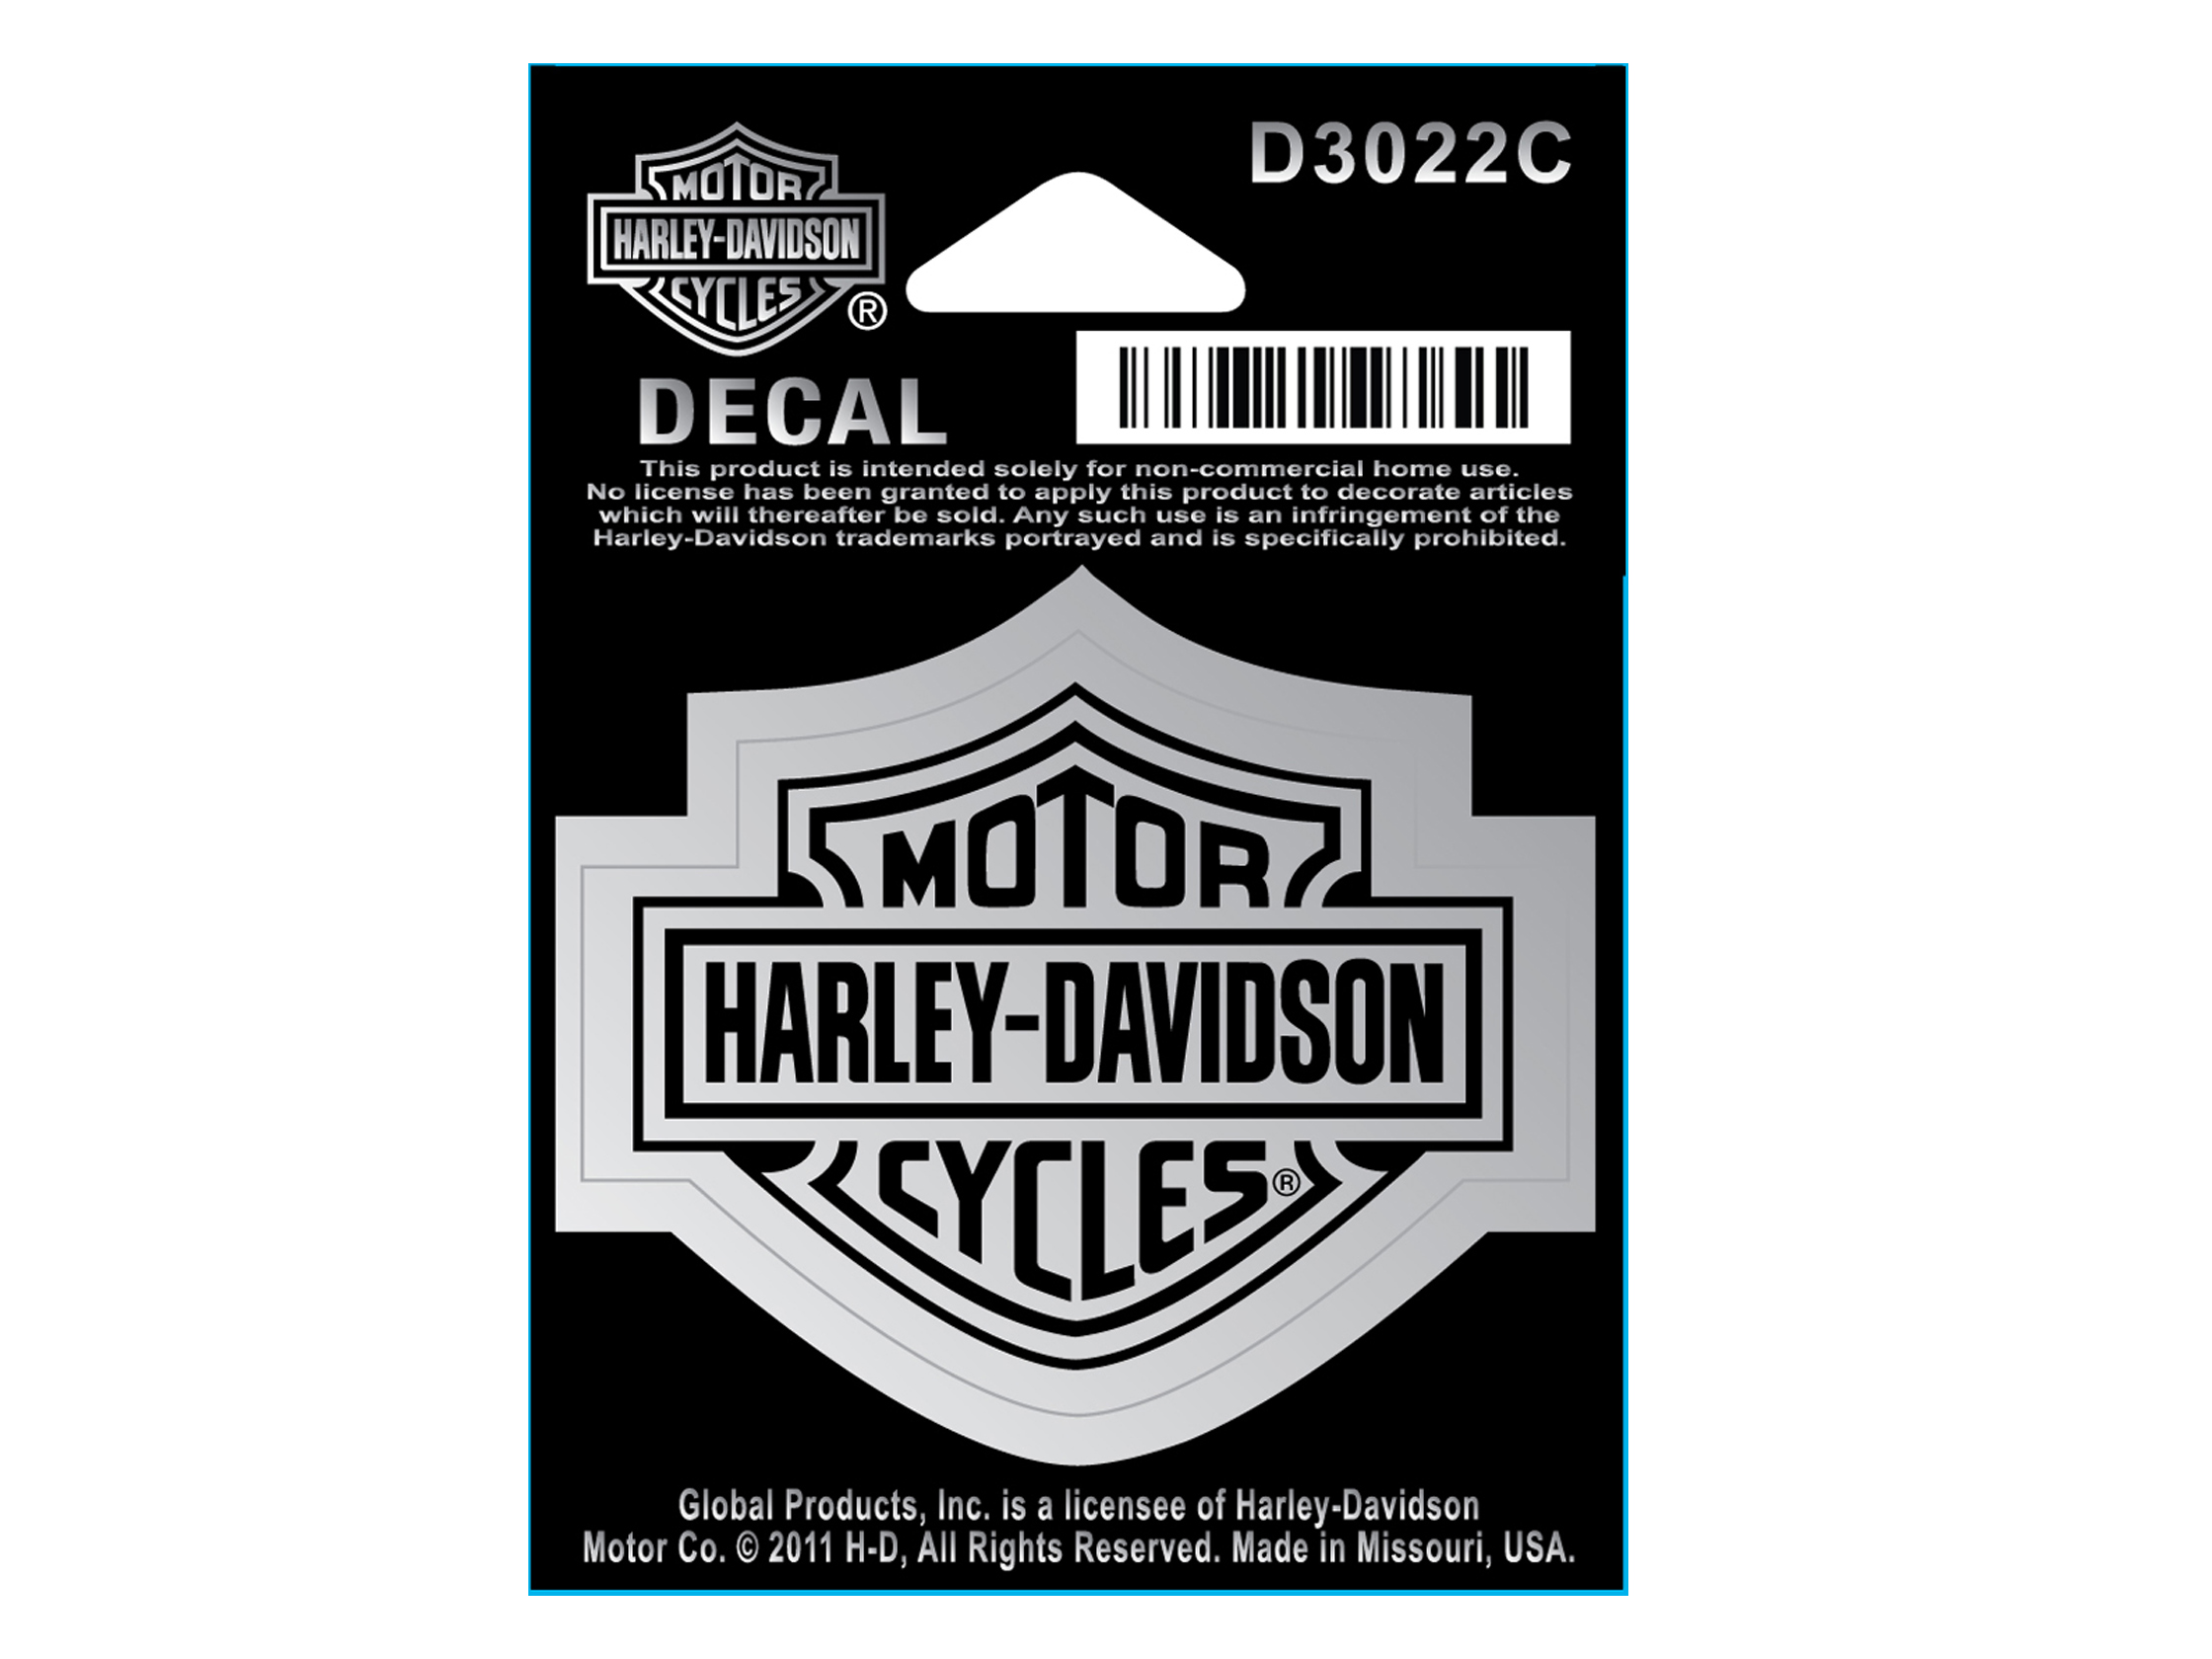 Aufkleber Bar & Shield GPD302C / Aufkleber / Accessoires / Accessoires /  - House-of-Flames Harley-Davidson